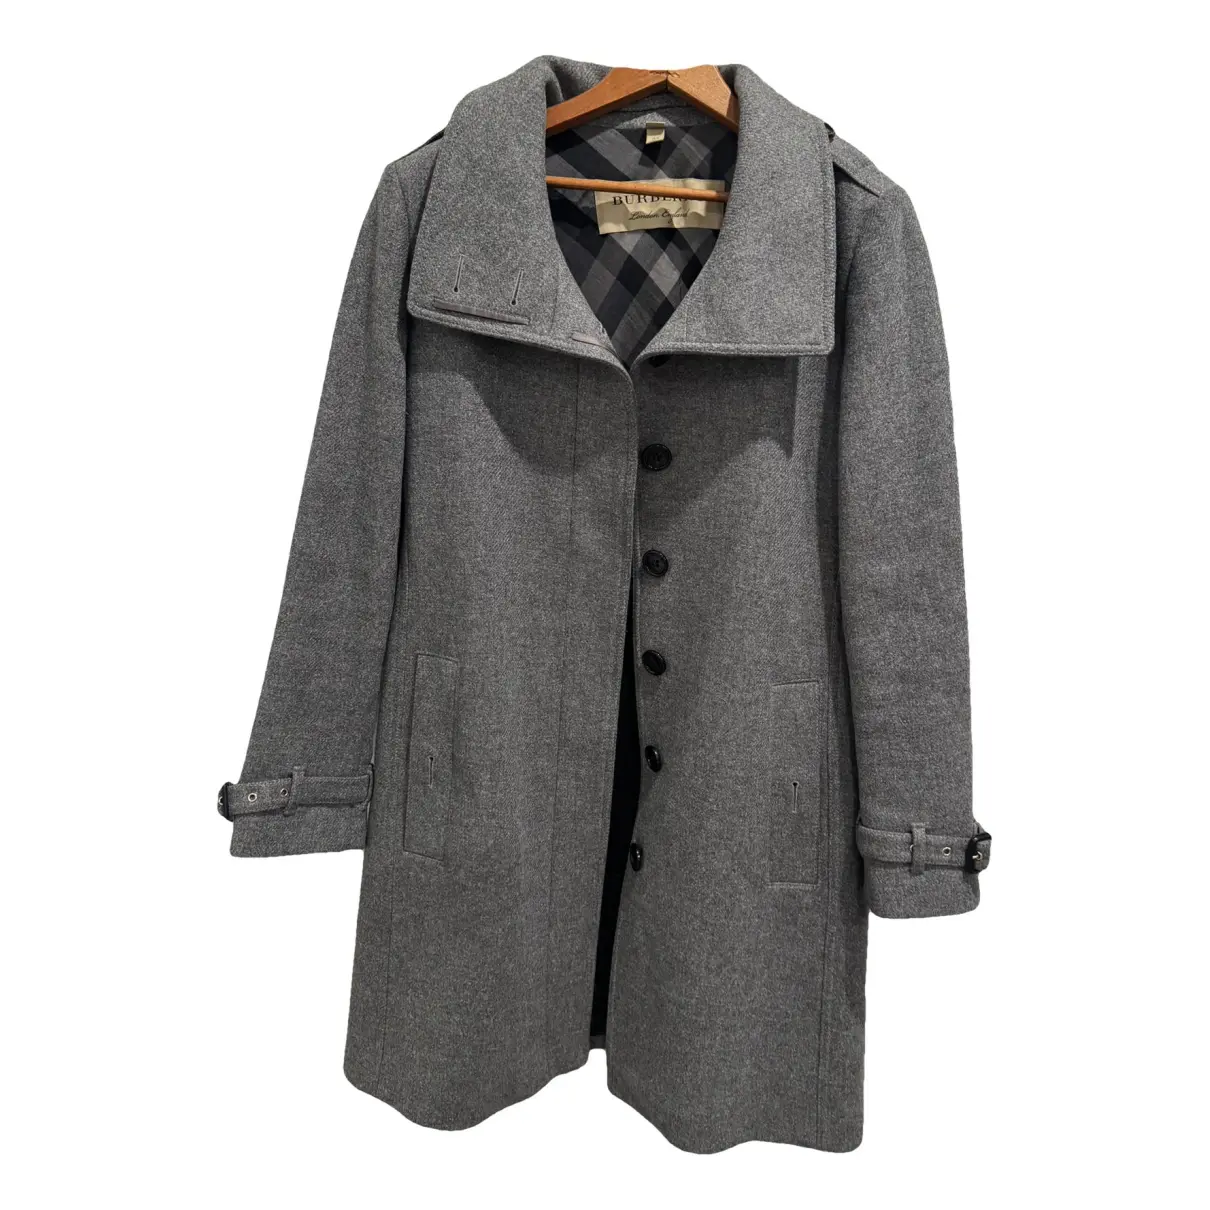 Chelsea wool coat